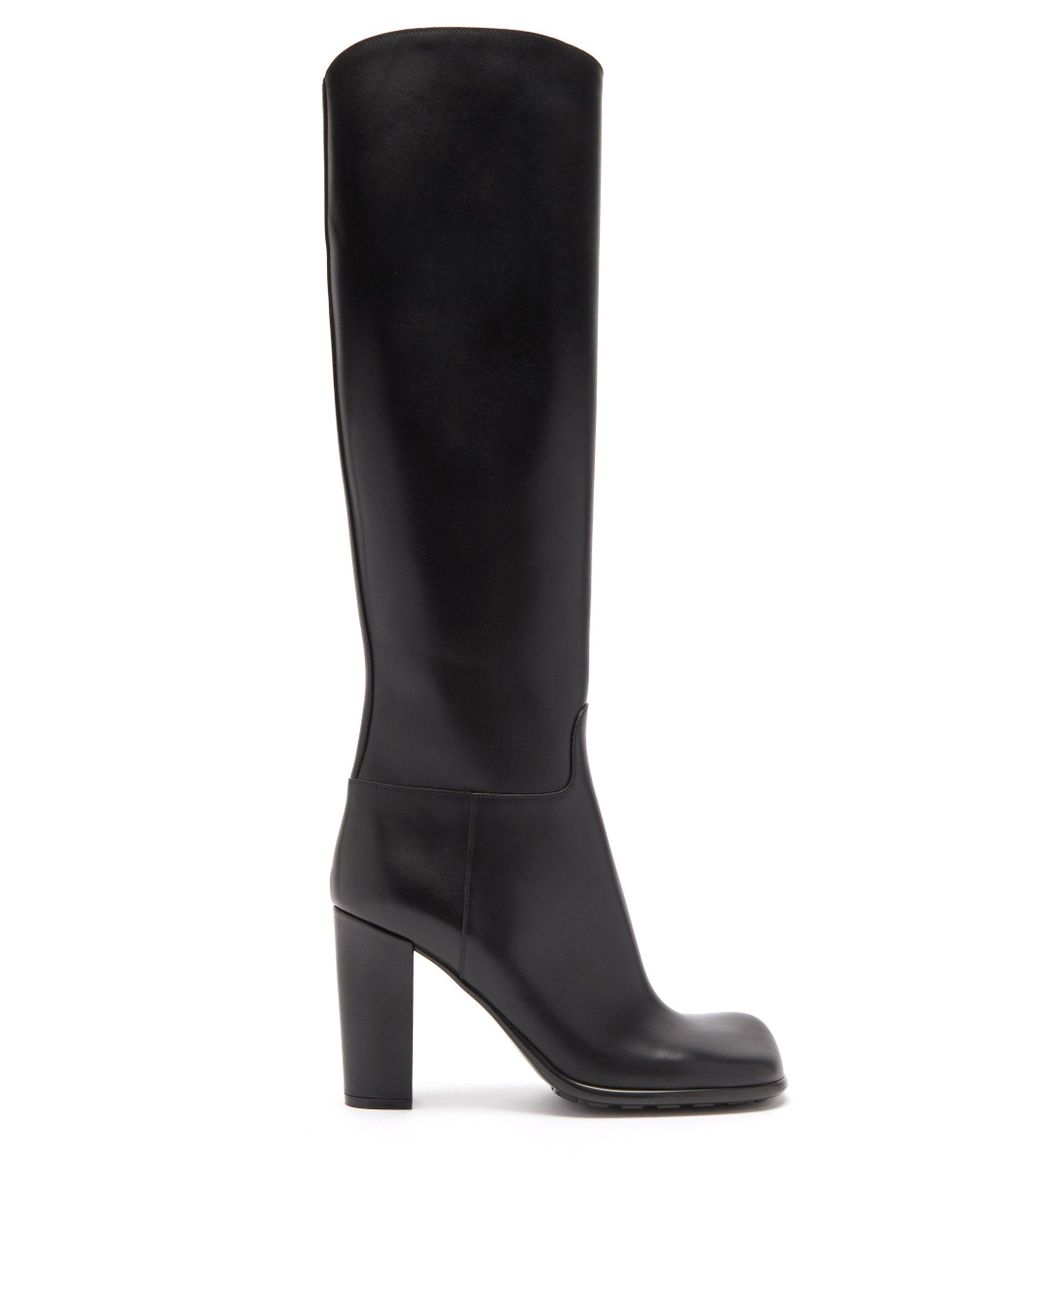 Bottega Veneta Storm Square-toe Leather Knee-high Boots in Black | Lyst